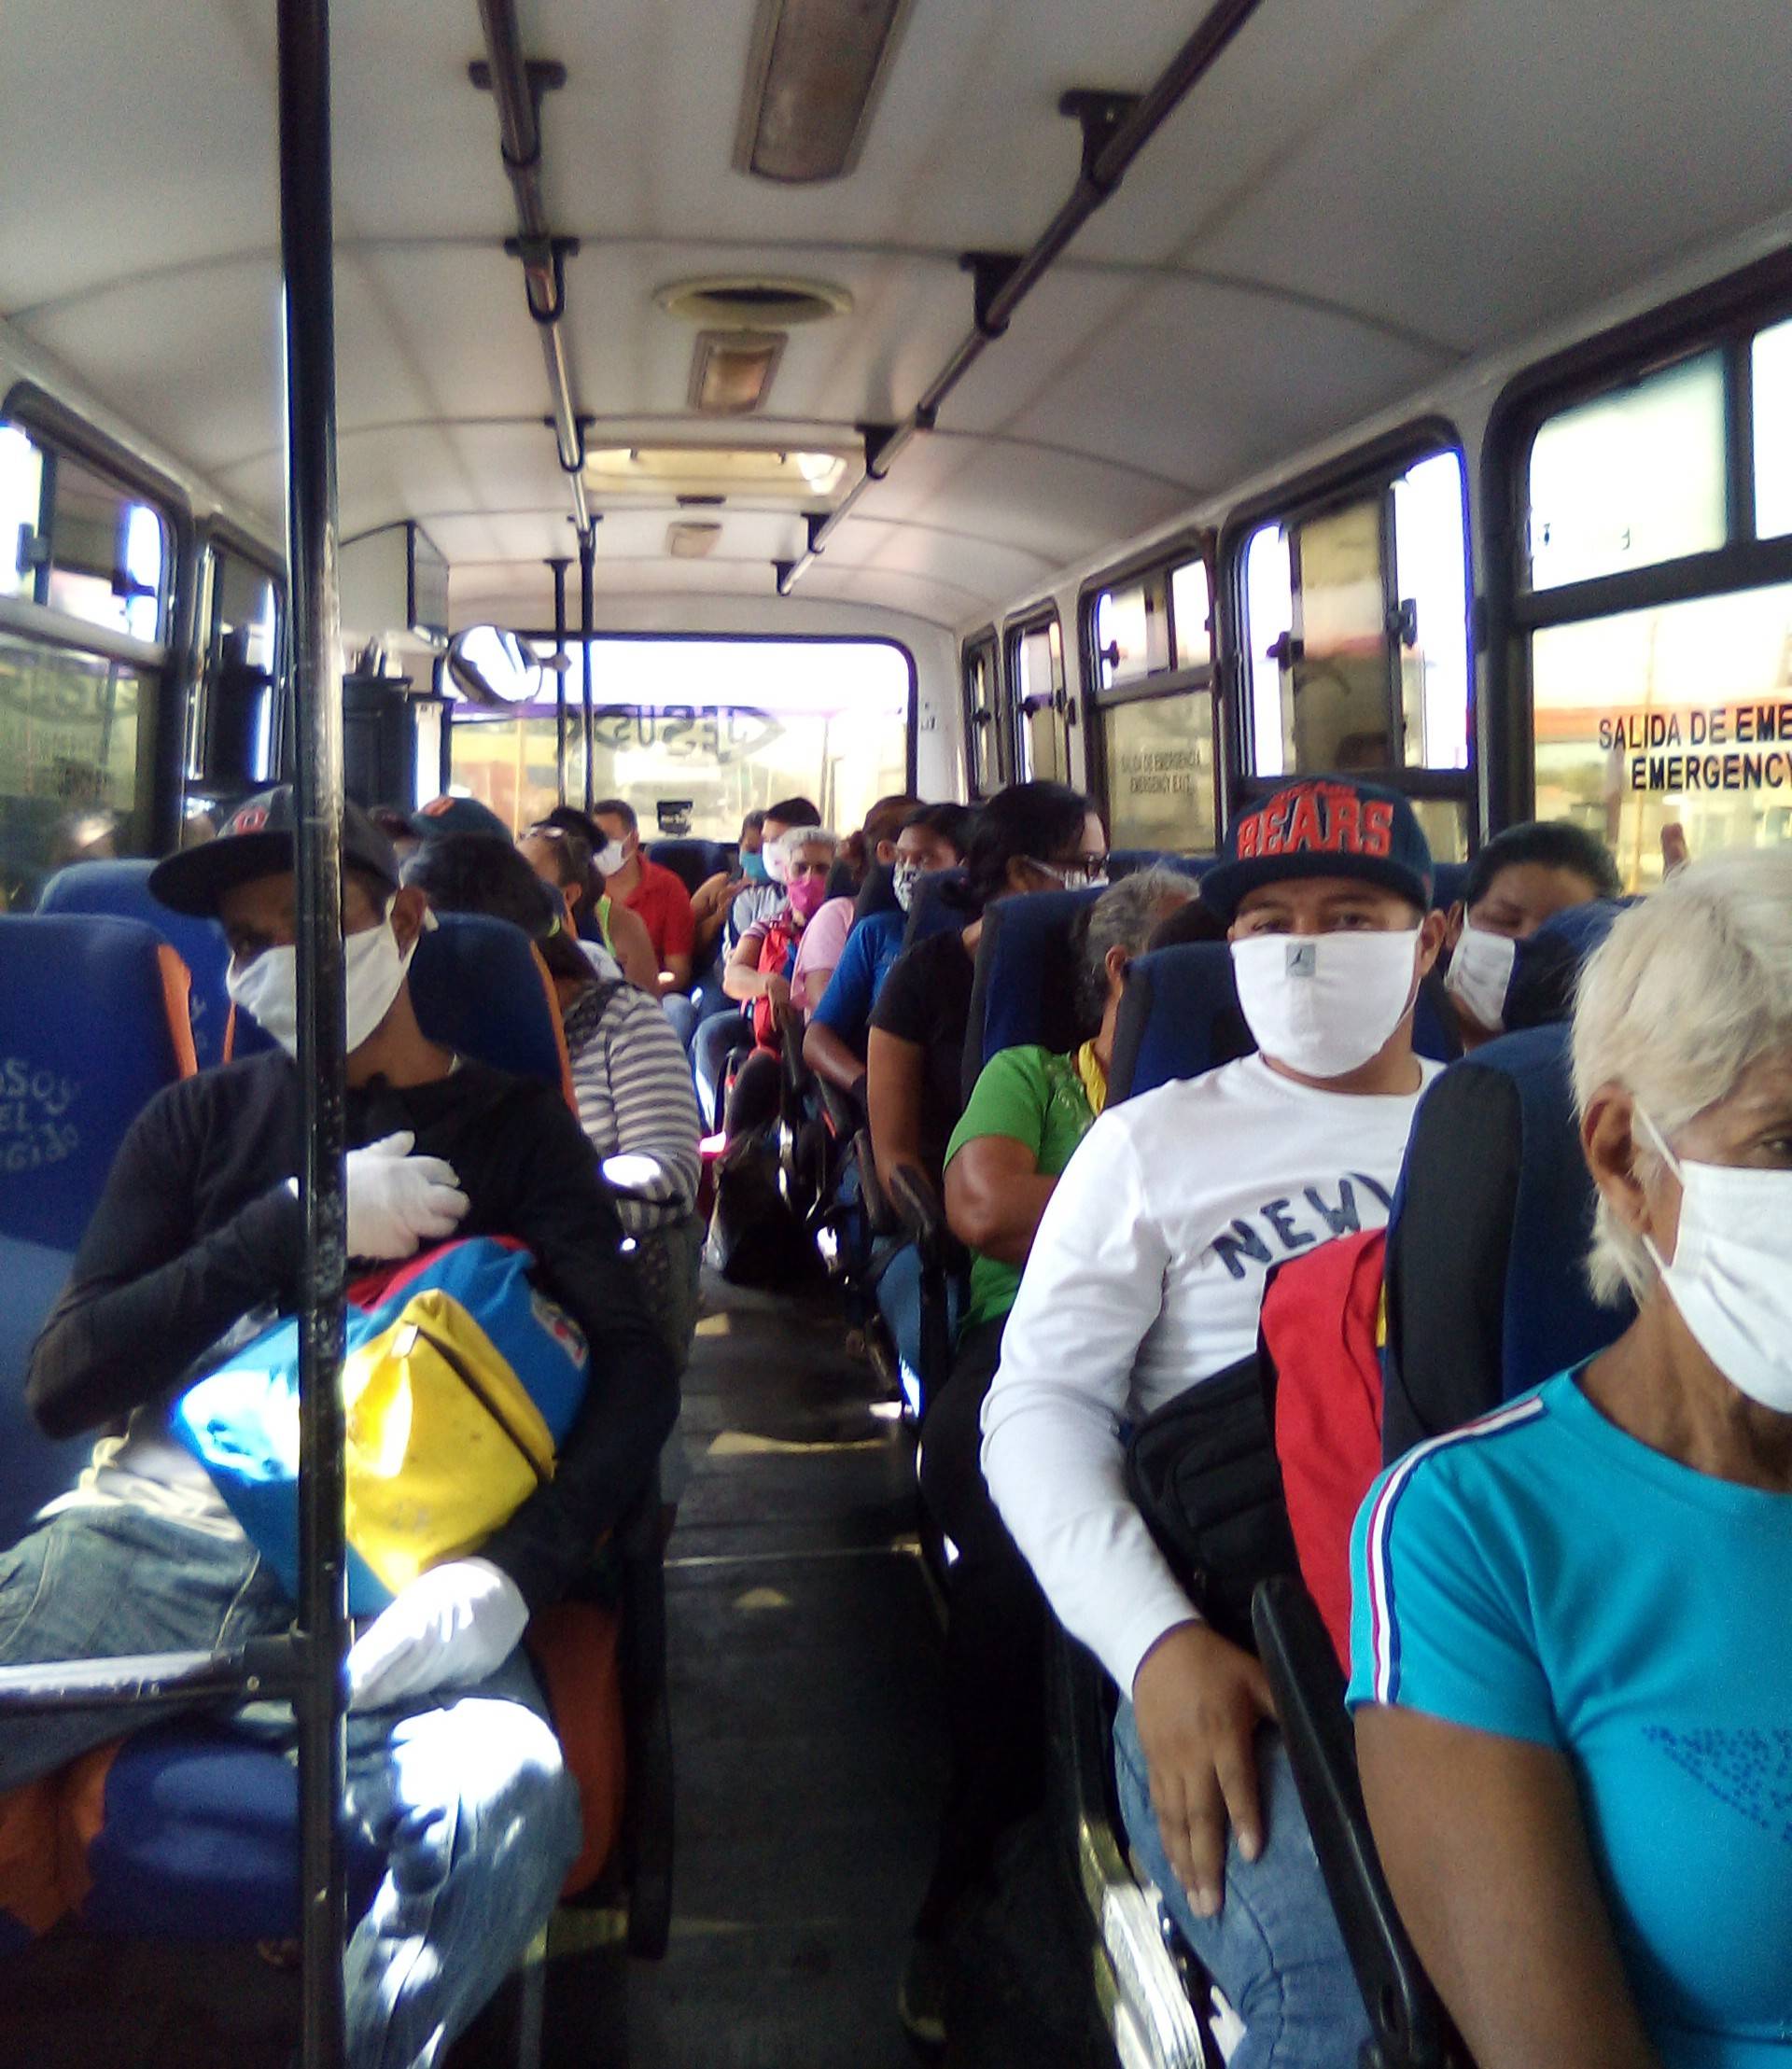 Coronavirus Situation in [Venezuela]: "One more test to overcome"